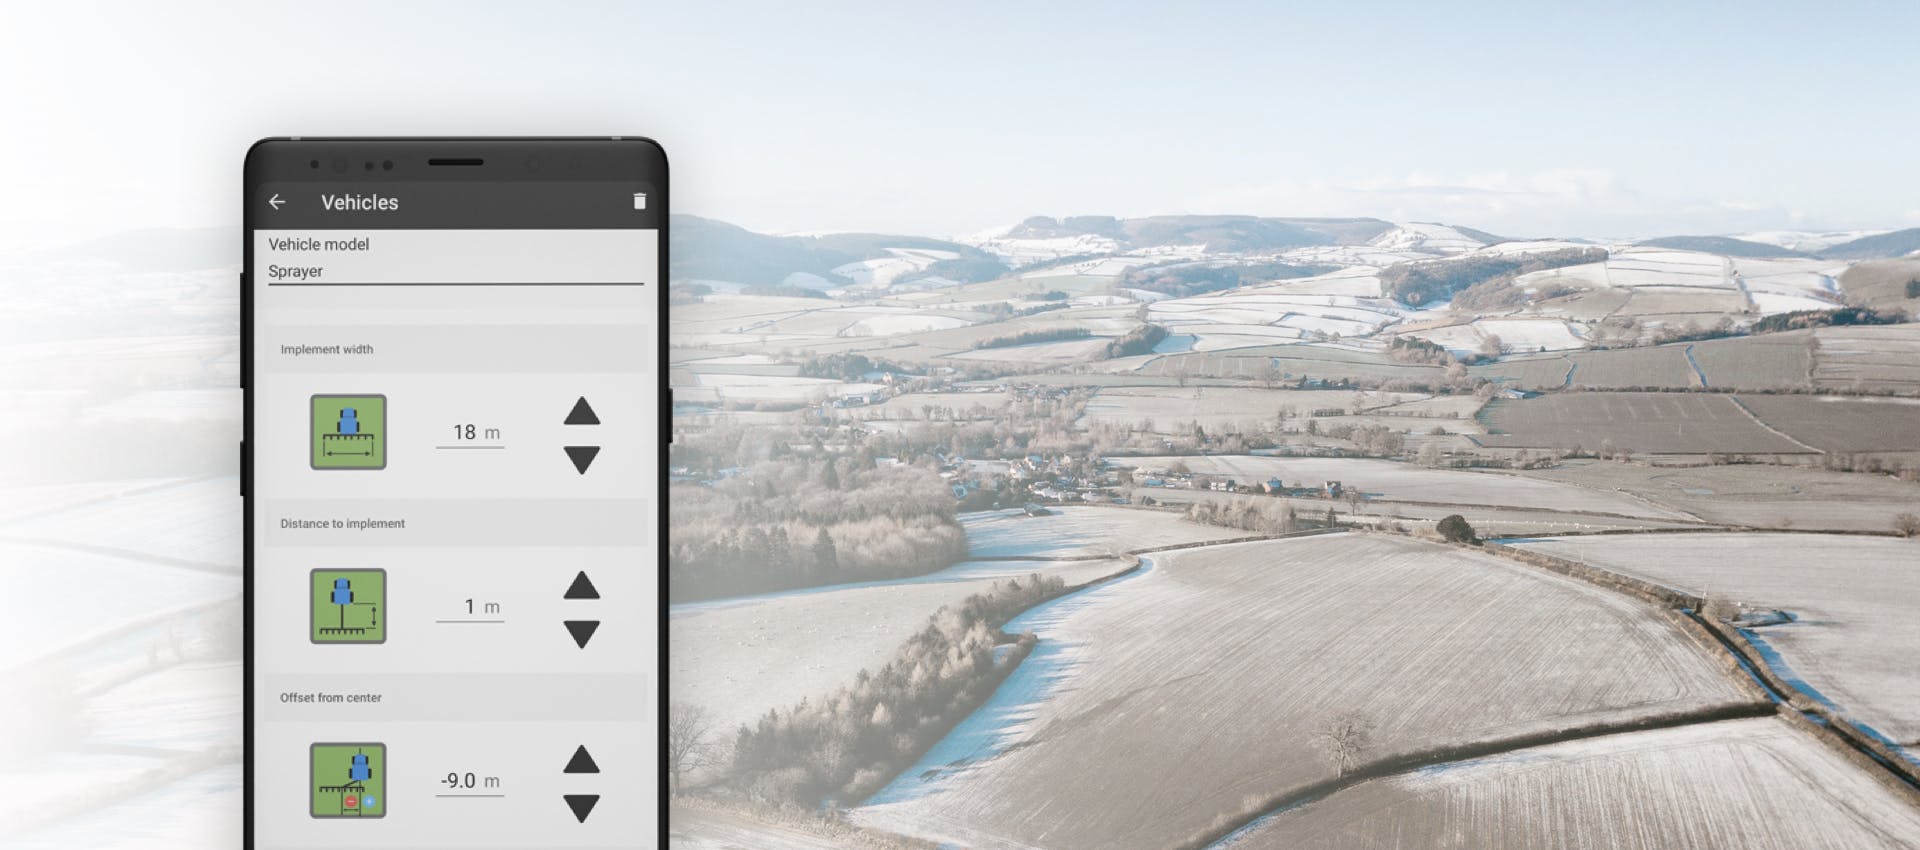 FieldBee Traktor GPS Navigations-App 7.0.2 Update, was hat sich geändert?